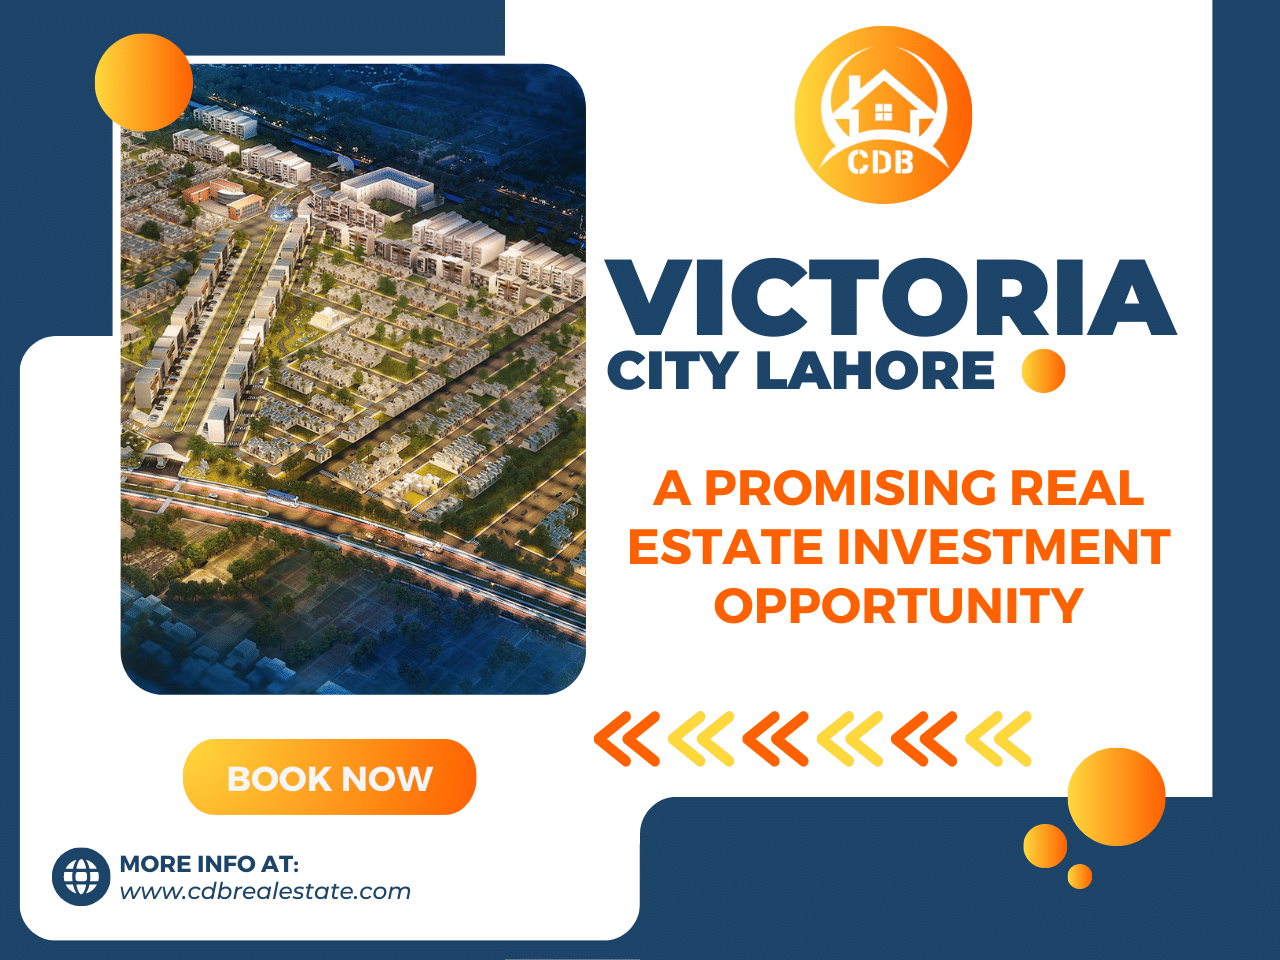 Victoria City Lahore Investment